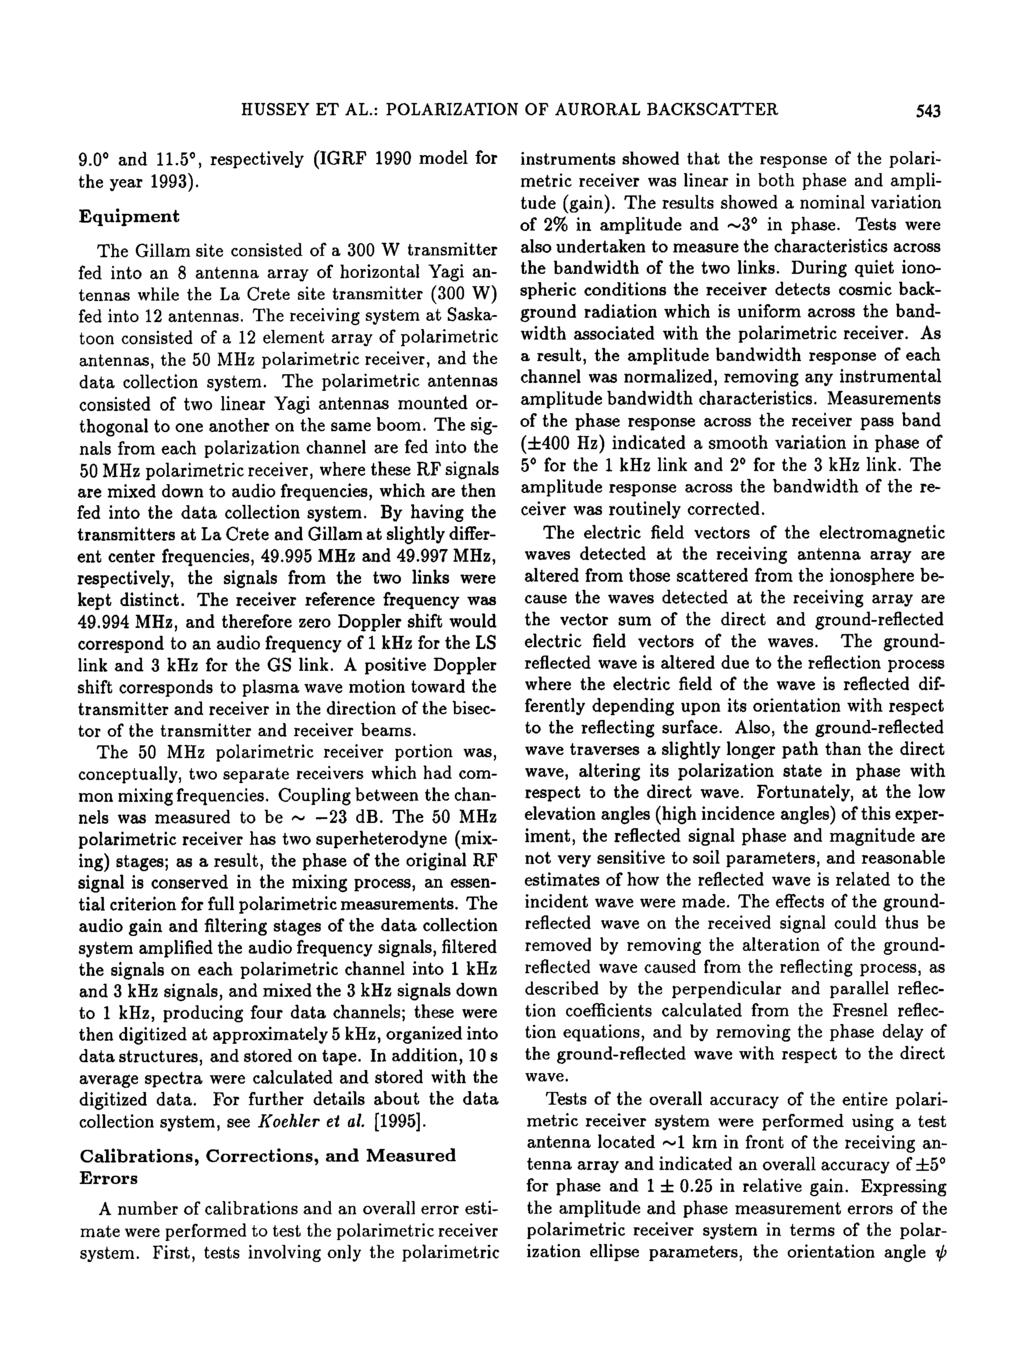 HUSSEY ET AL.: POLARIZATION OF AURORAL BACKSCATTER $43 9.00 and 11.5 ø, respectively (IGRF 1990 model for the year 1993).